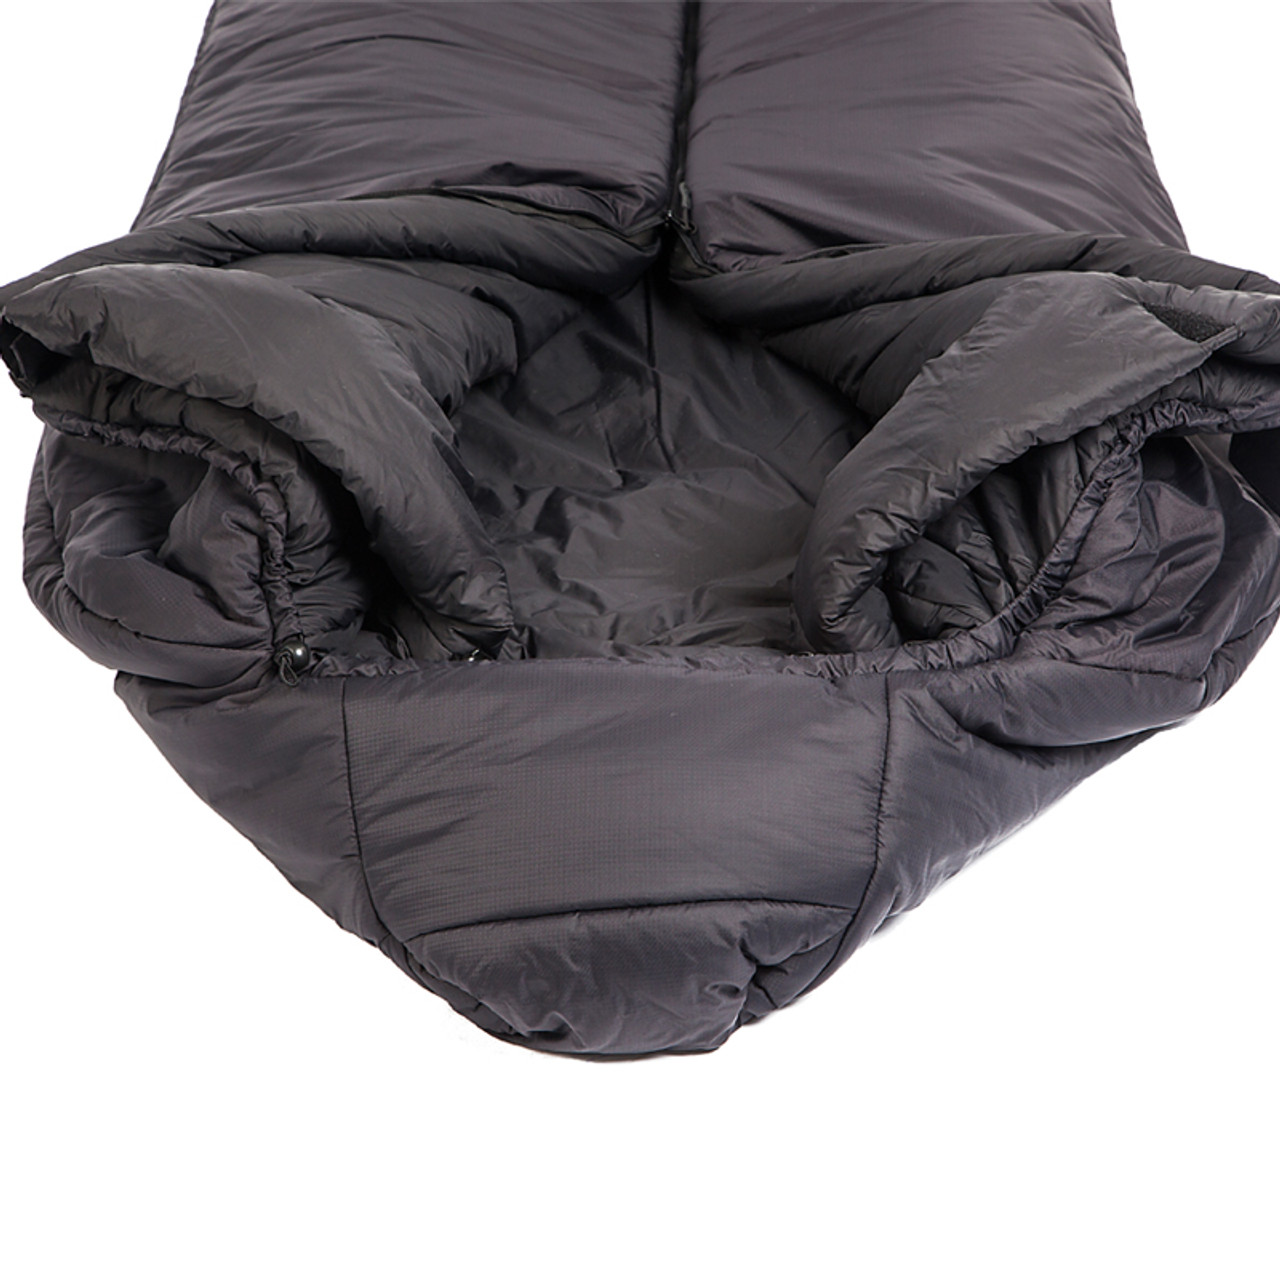 Snugpak Softie 18 Antarctica RE Sleeping Bag UK Made